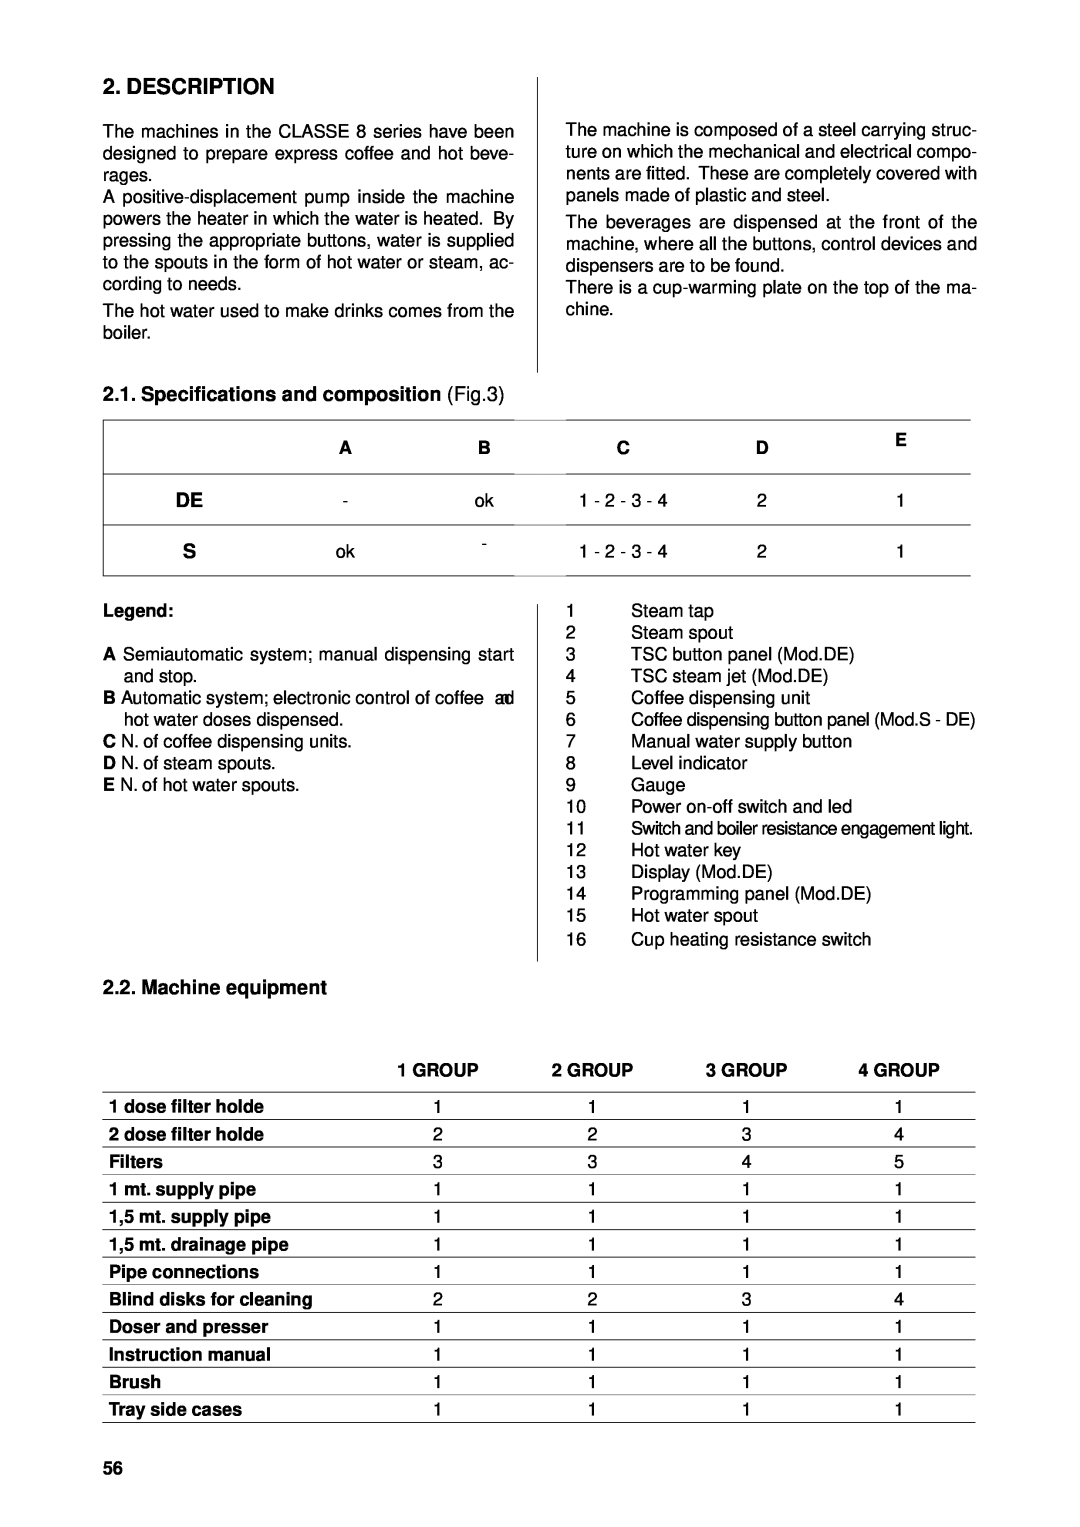 Rancilio Classe 8 manual Description, Specifications and composition, Machine equipment 